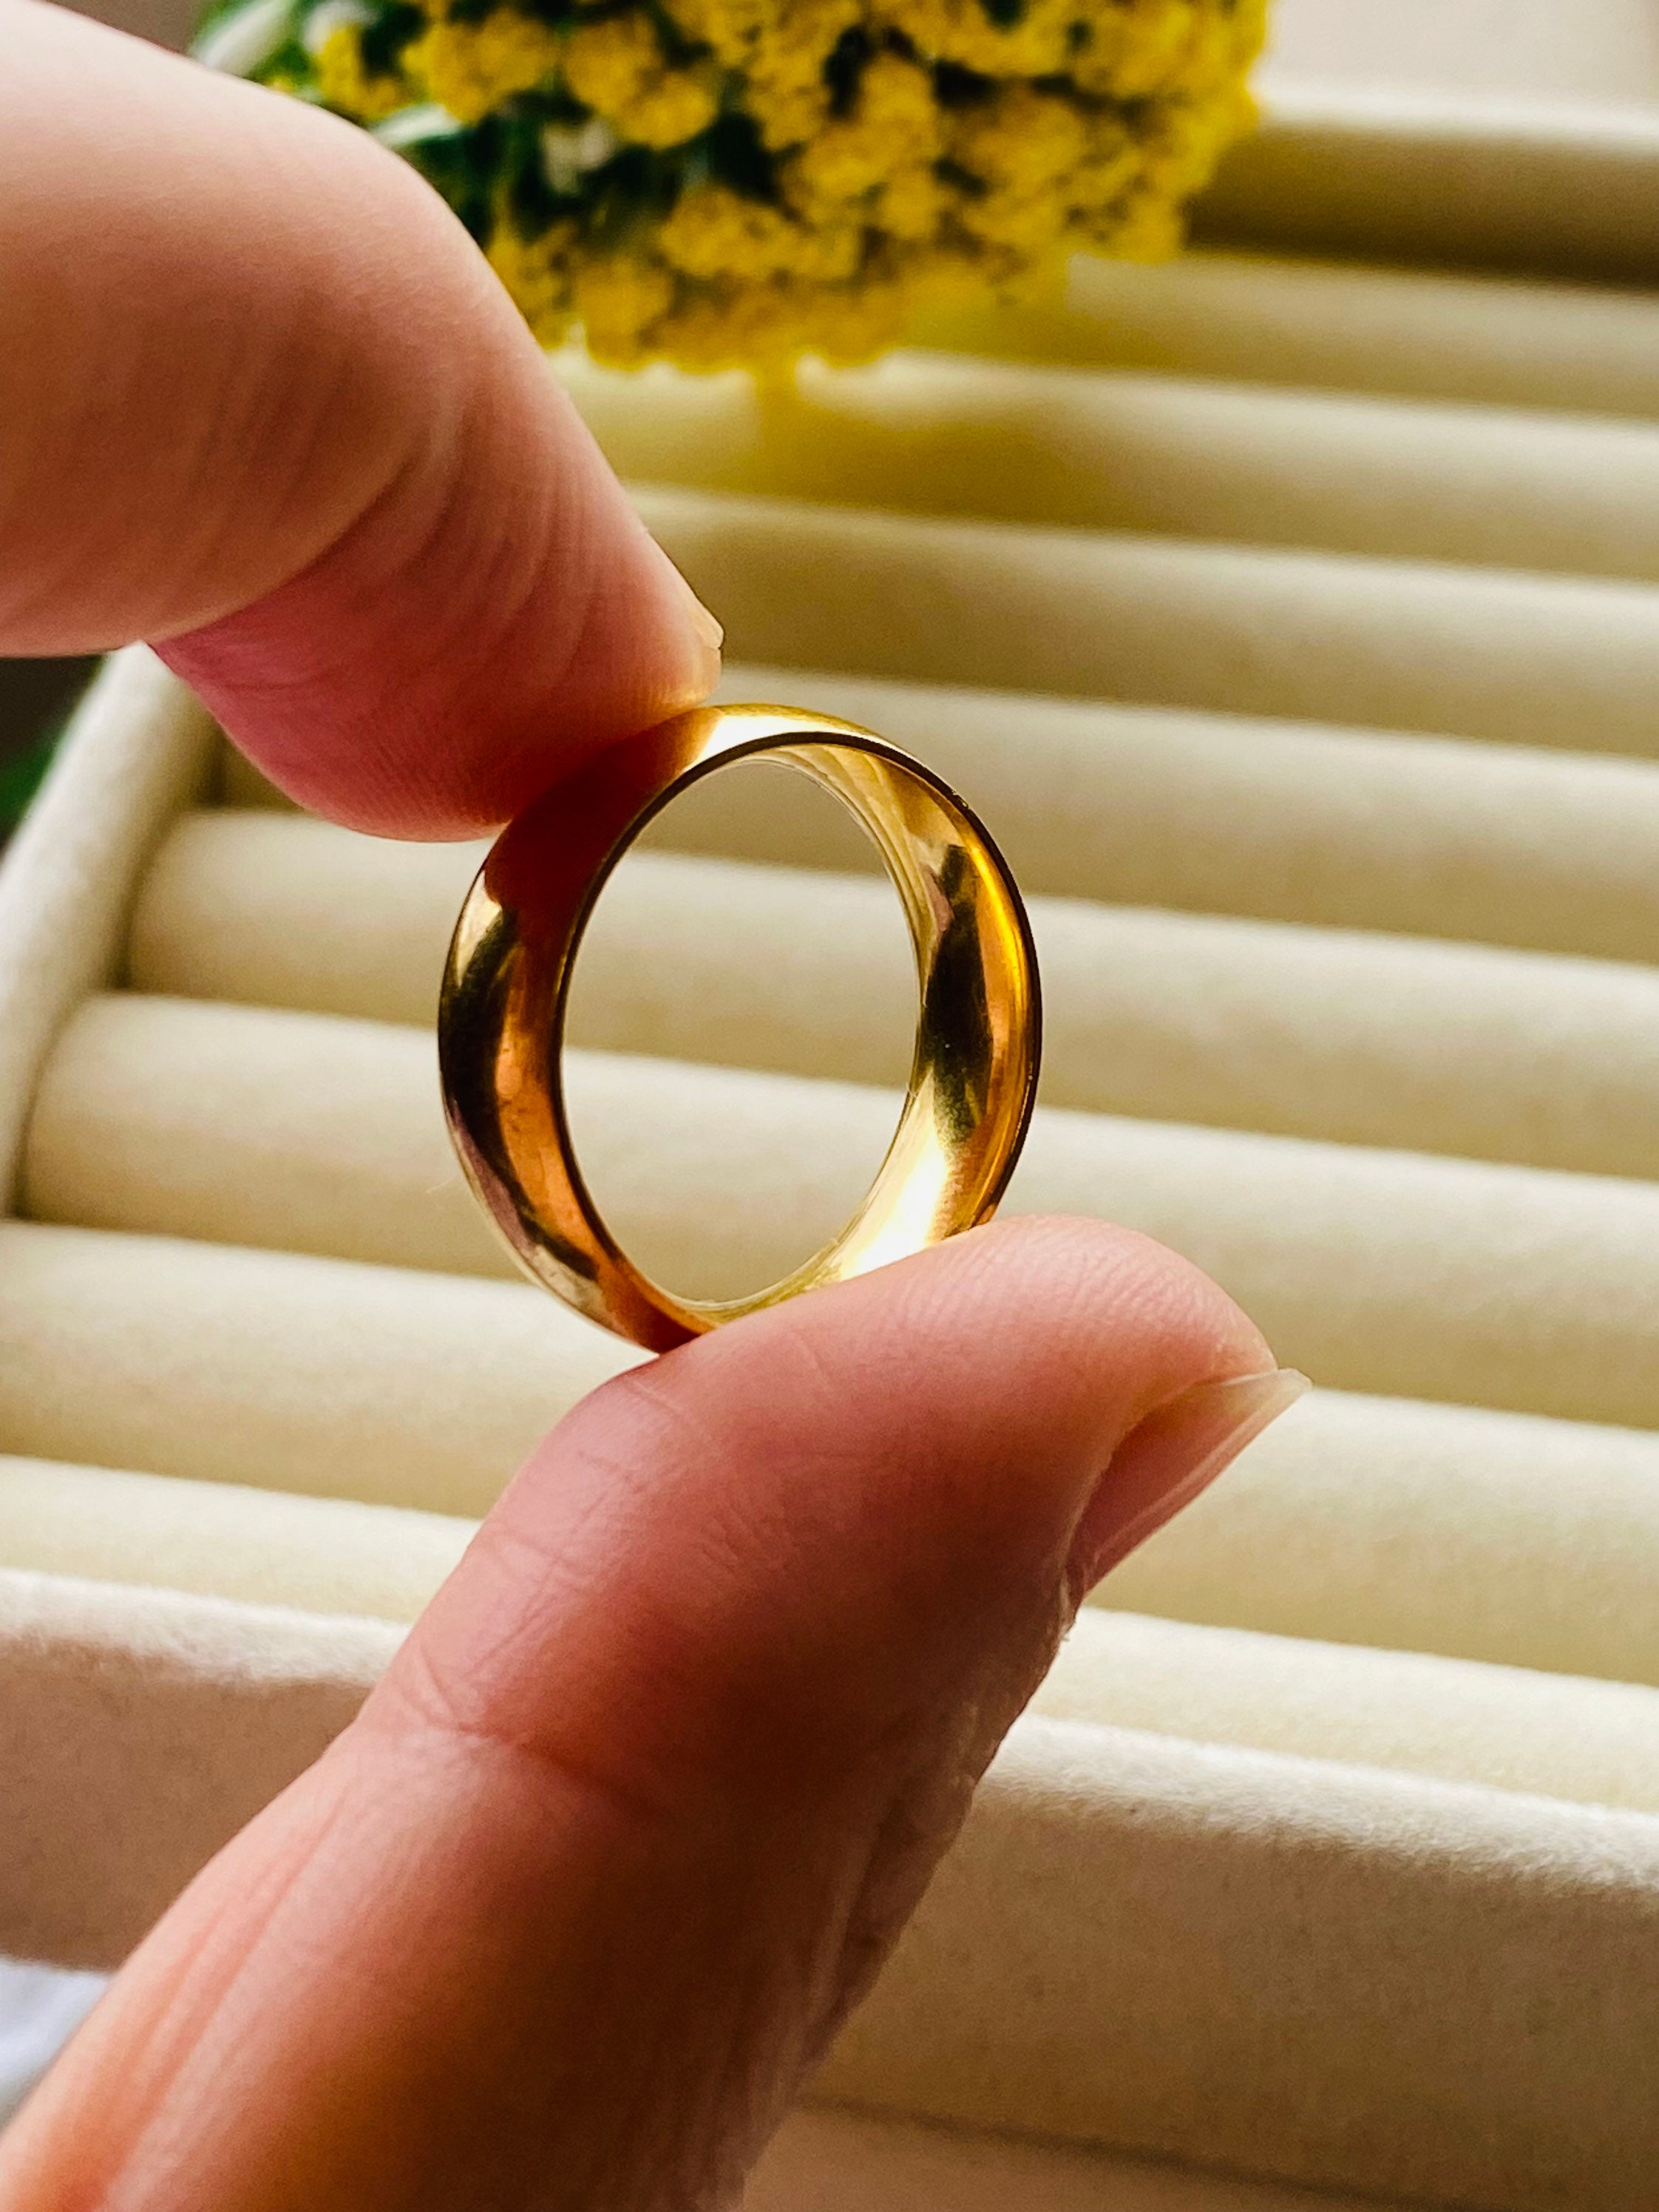 18K Gold Band Ringsplain Band Rings delicate Simple Ring 